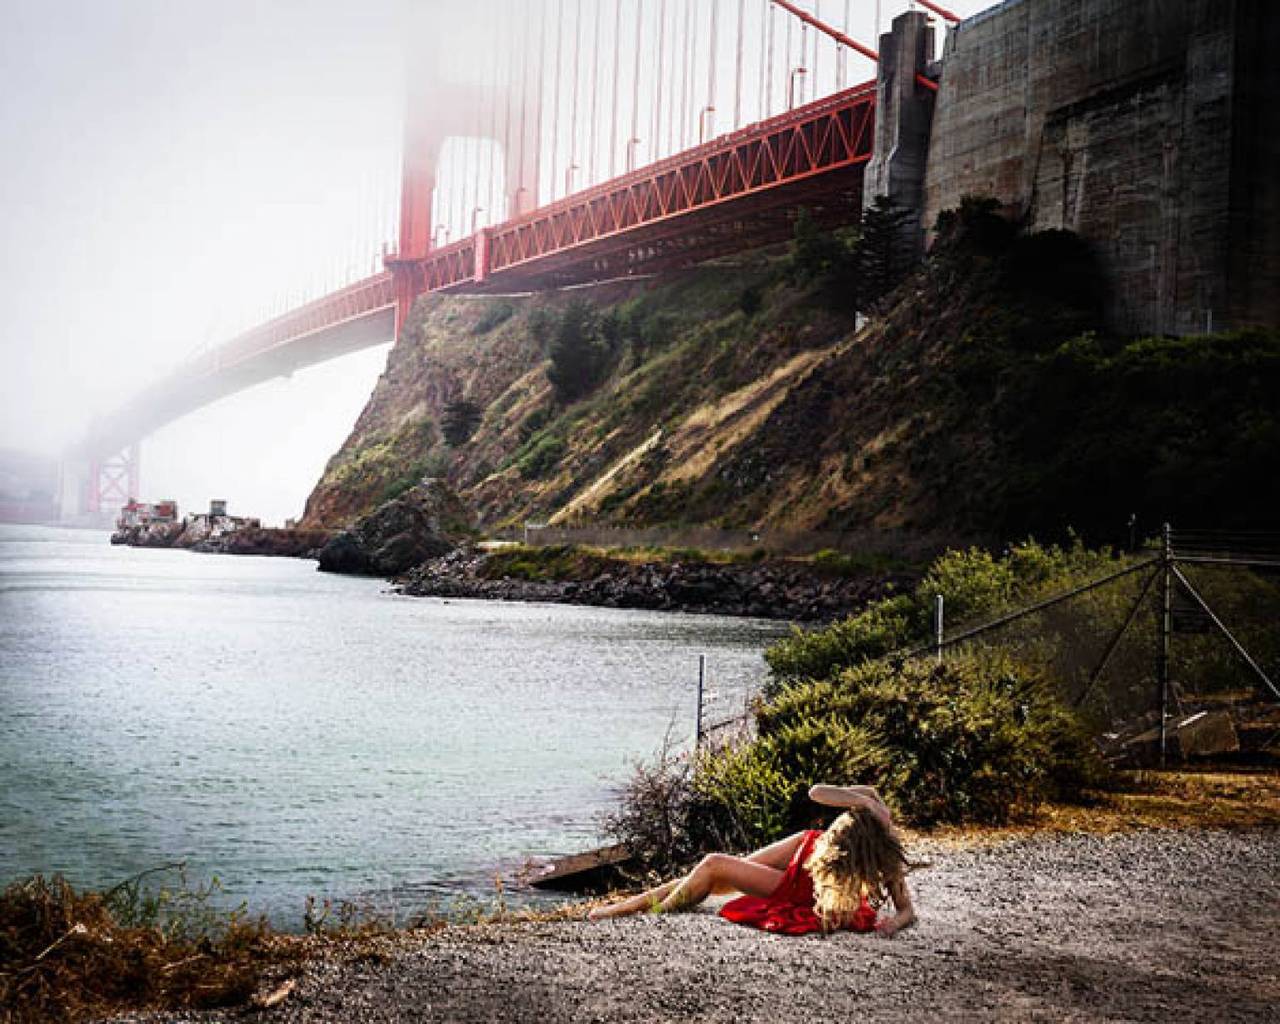 David Drebin Color Photograph - Alone with a View